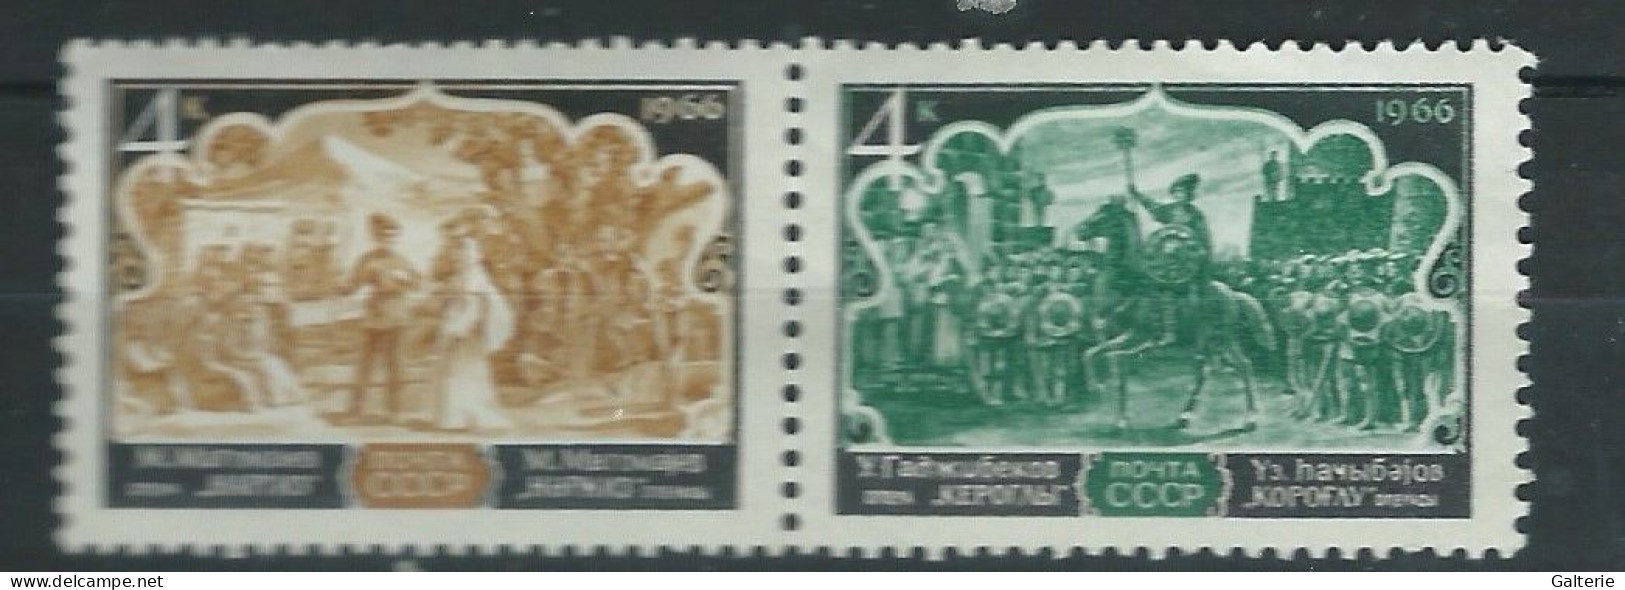 URSS - Neufs - 1966 - YT N° 3154-3155 - Opéras DAzerbaîdjan - Unused Stamps